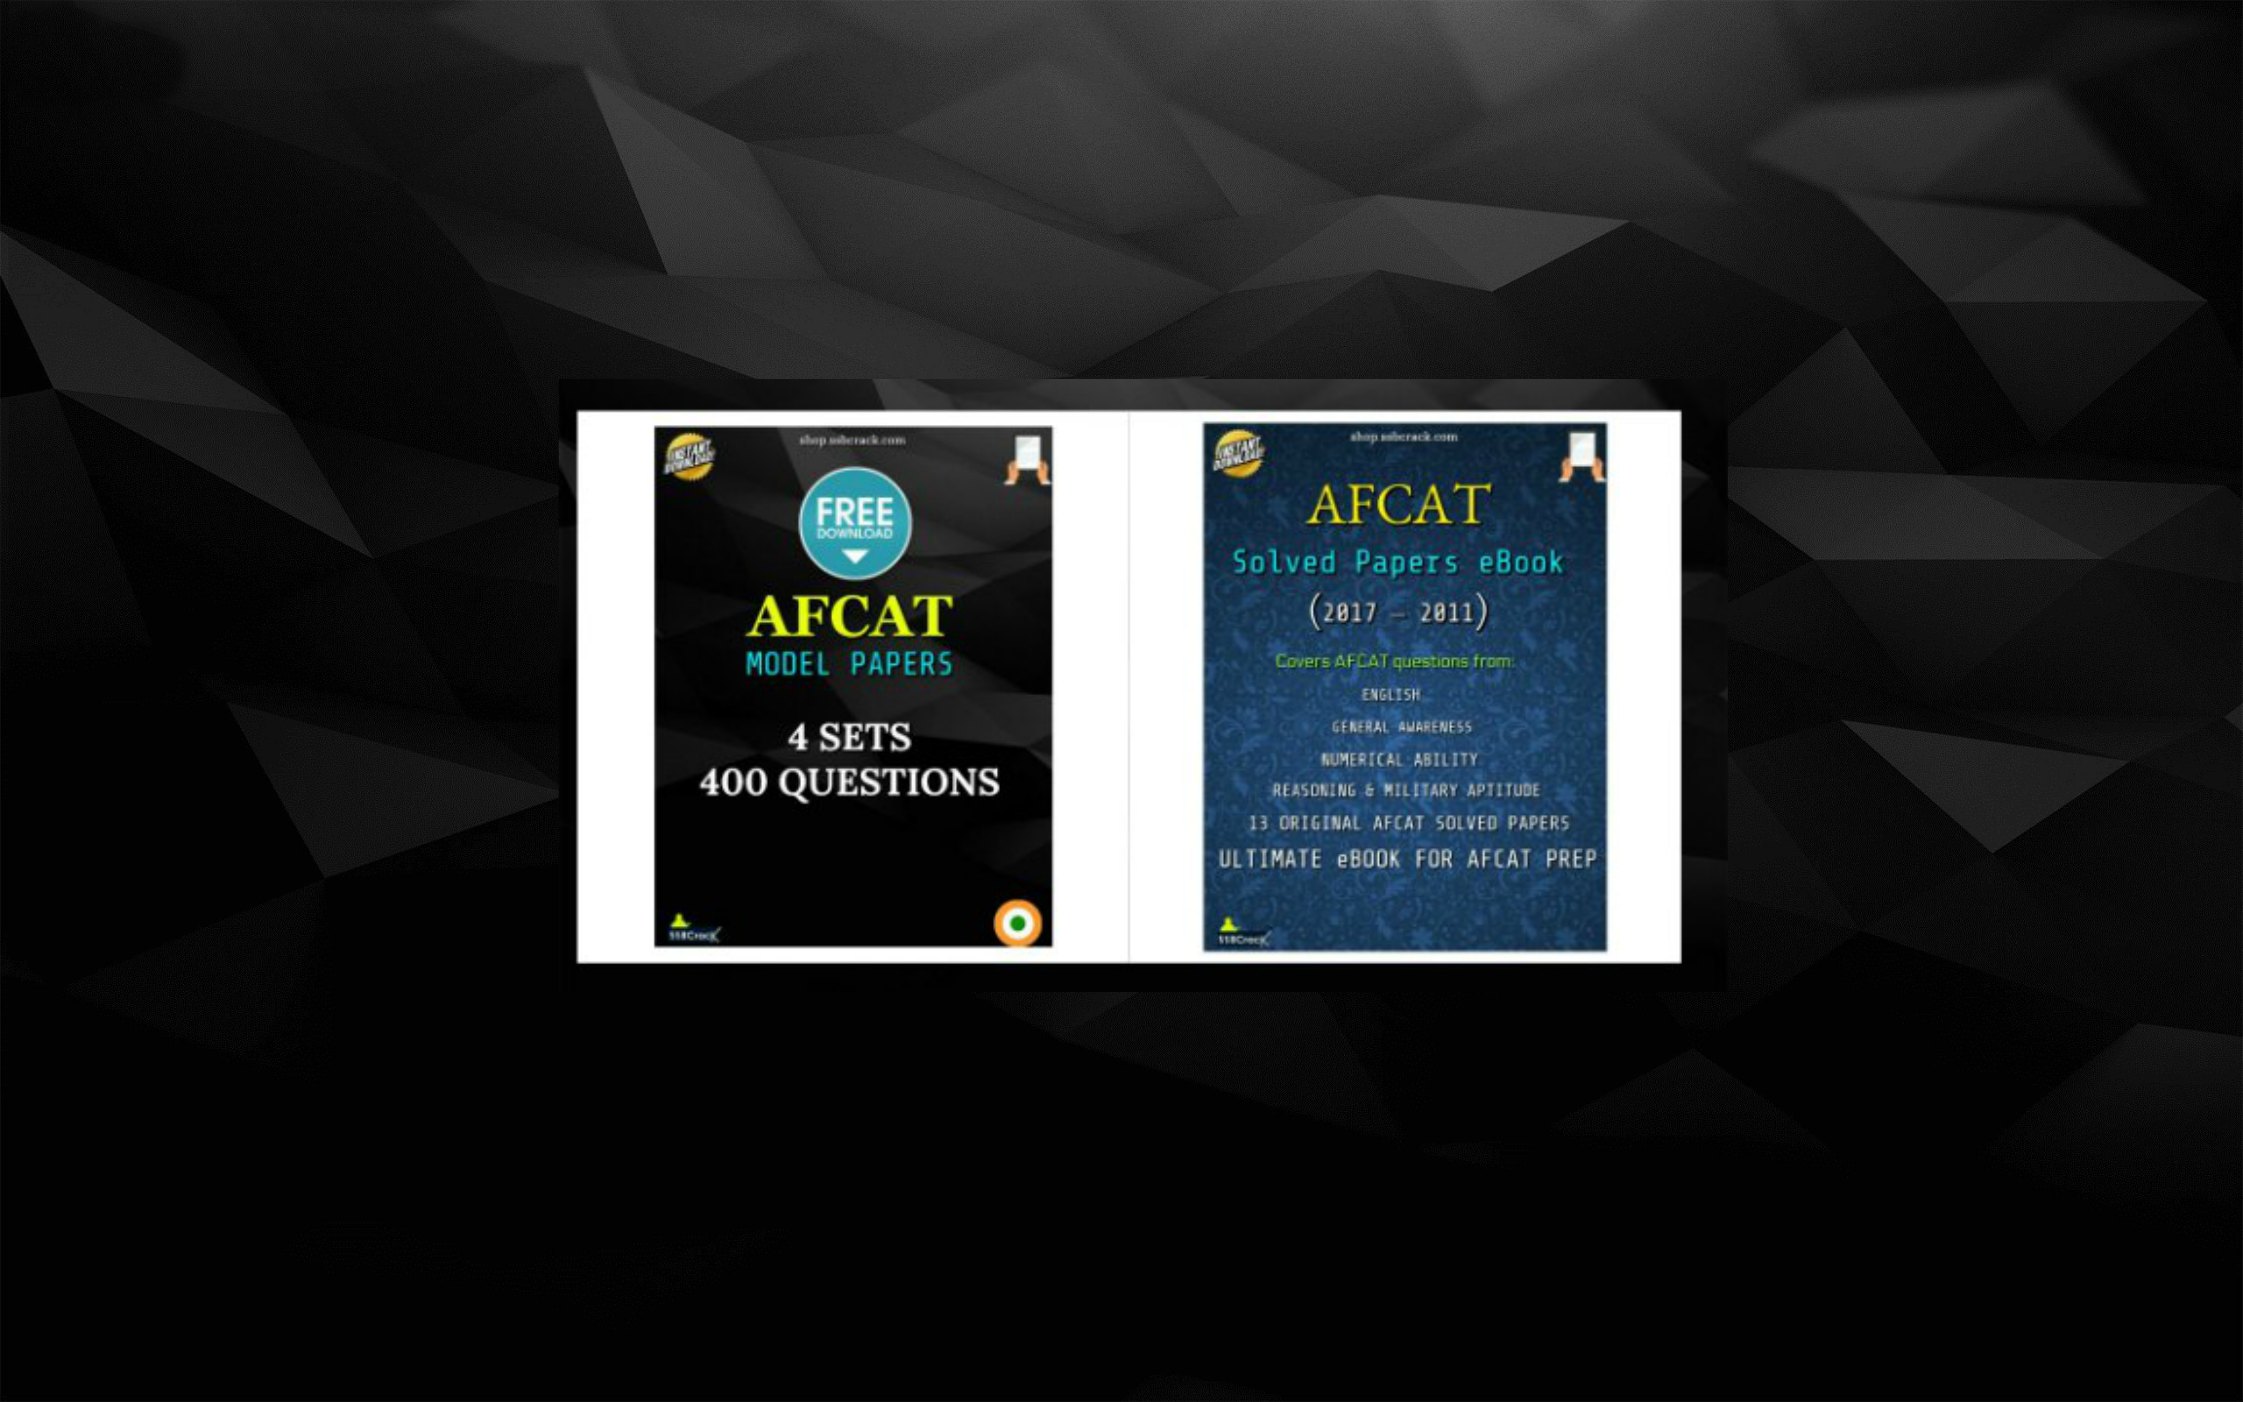 Free Download Ebooks For Afcat Exam